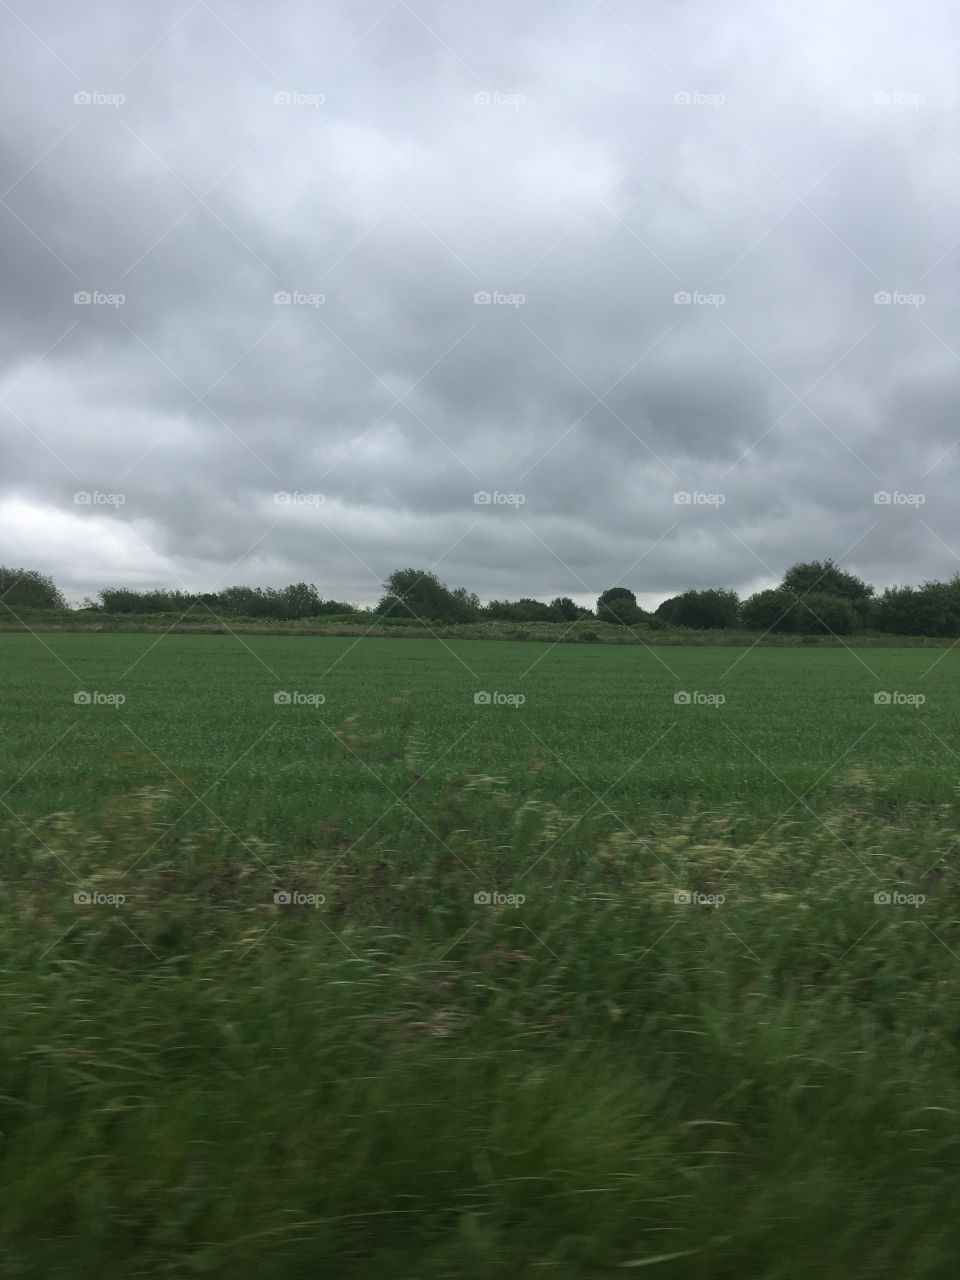 Grey Skies on Green Fields